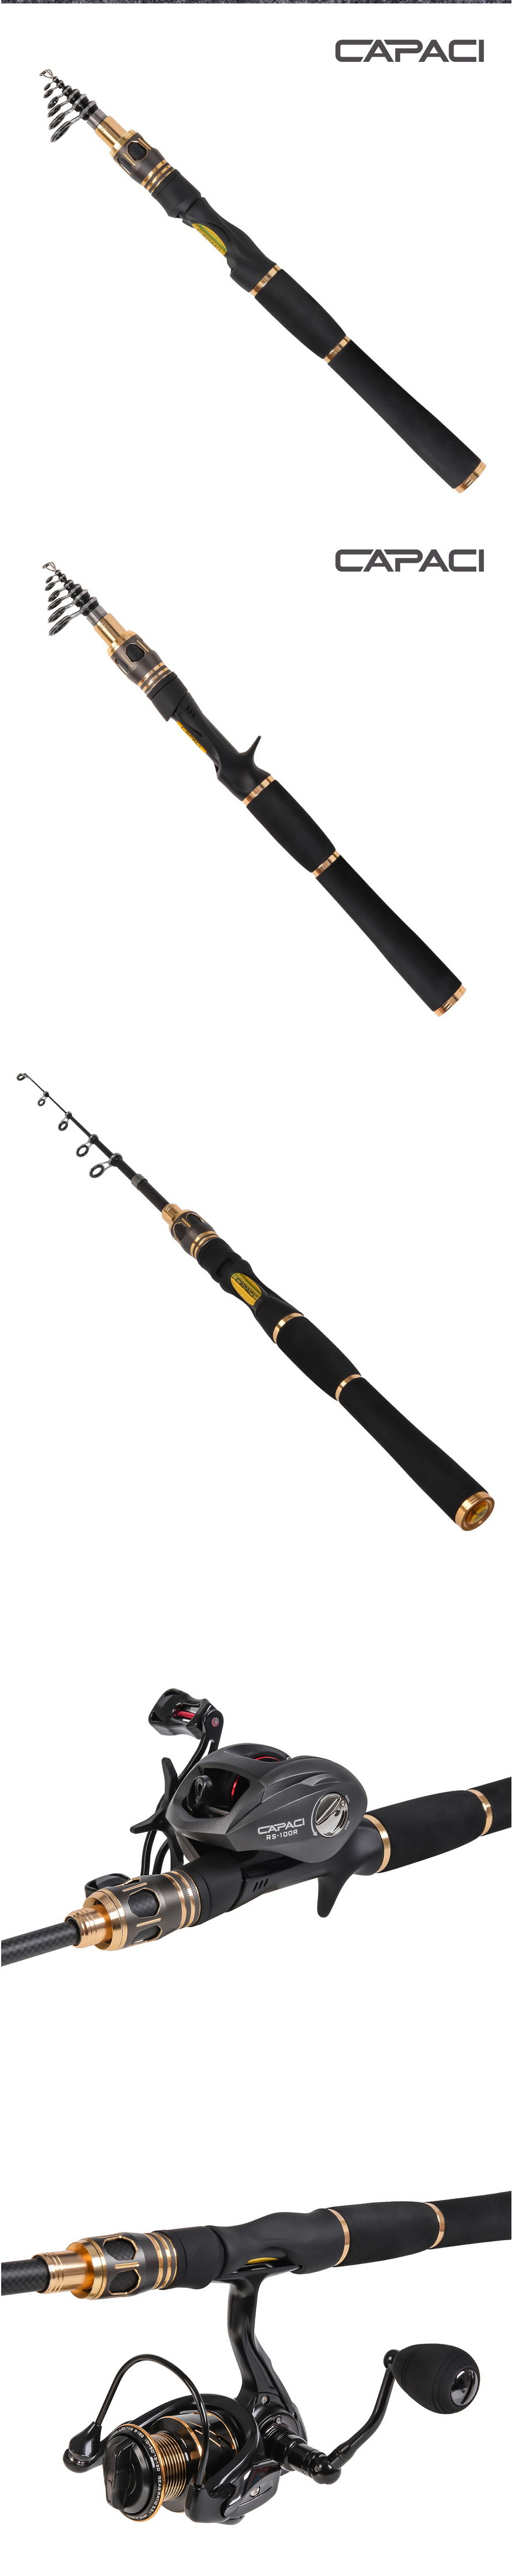 CAPACI-28082-RF-Series-Carbon-Alloy-Retractable-Fishing-Rod-Portable-Outdoor-Fishing-Pole-Fishing-Ac-1572325-2